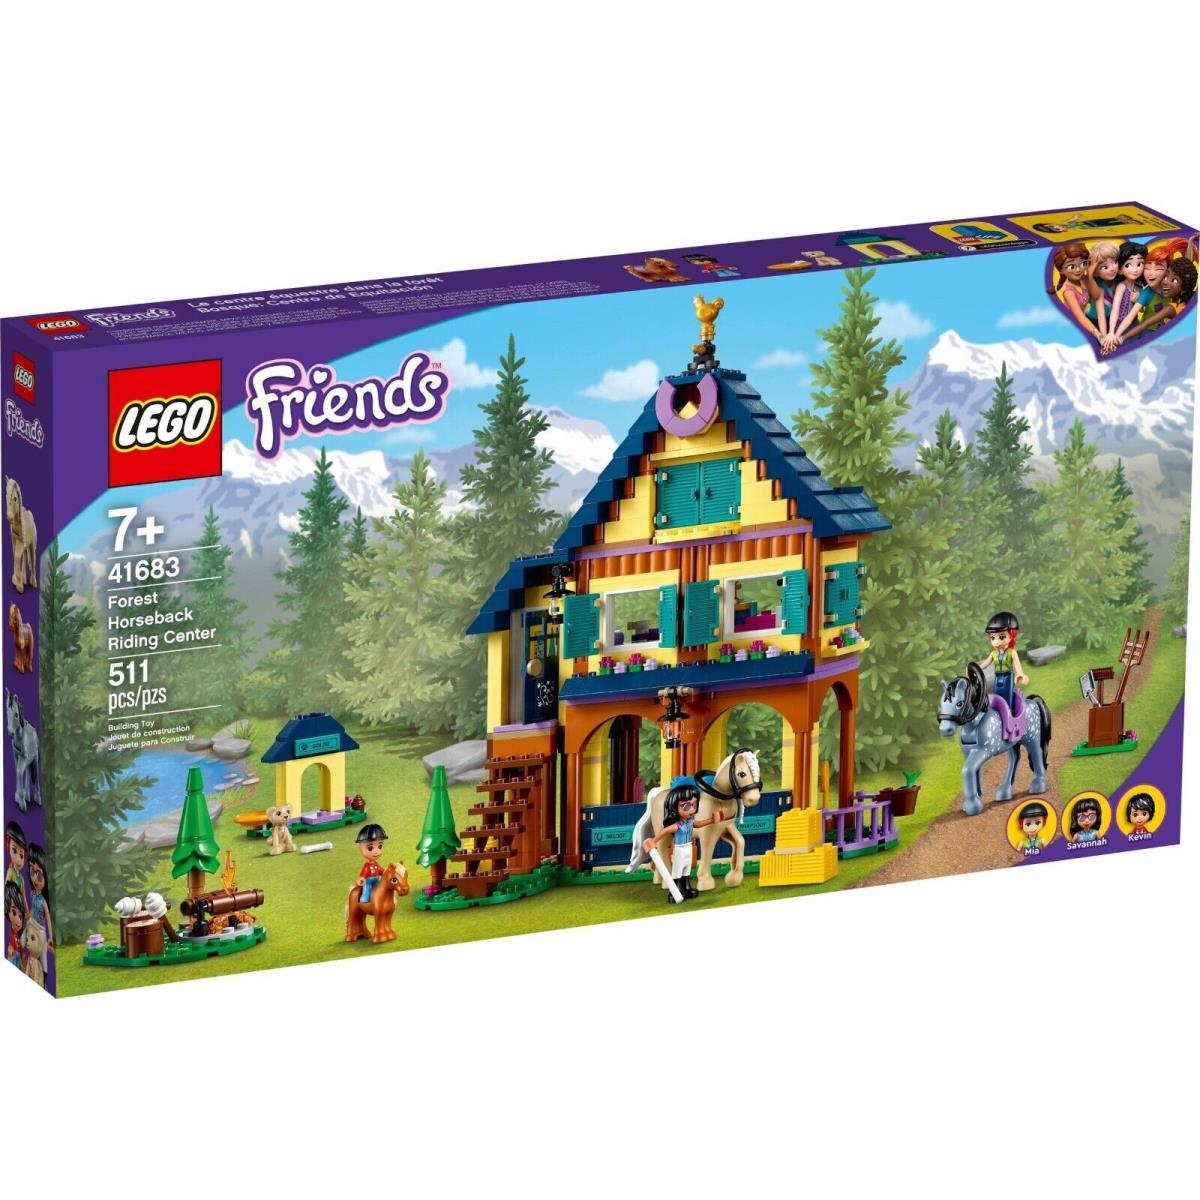 Lego Friends Forest Horseback Riding Center Set 41683